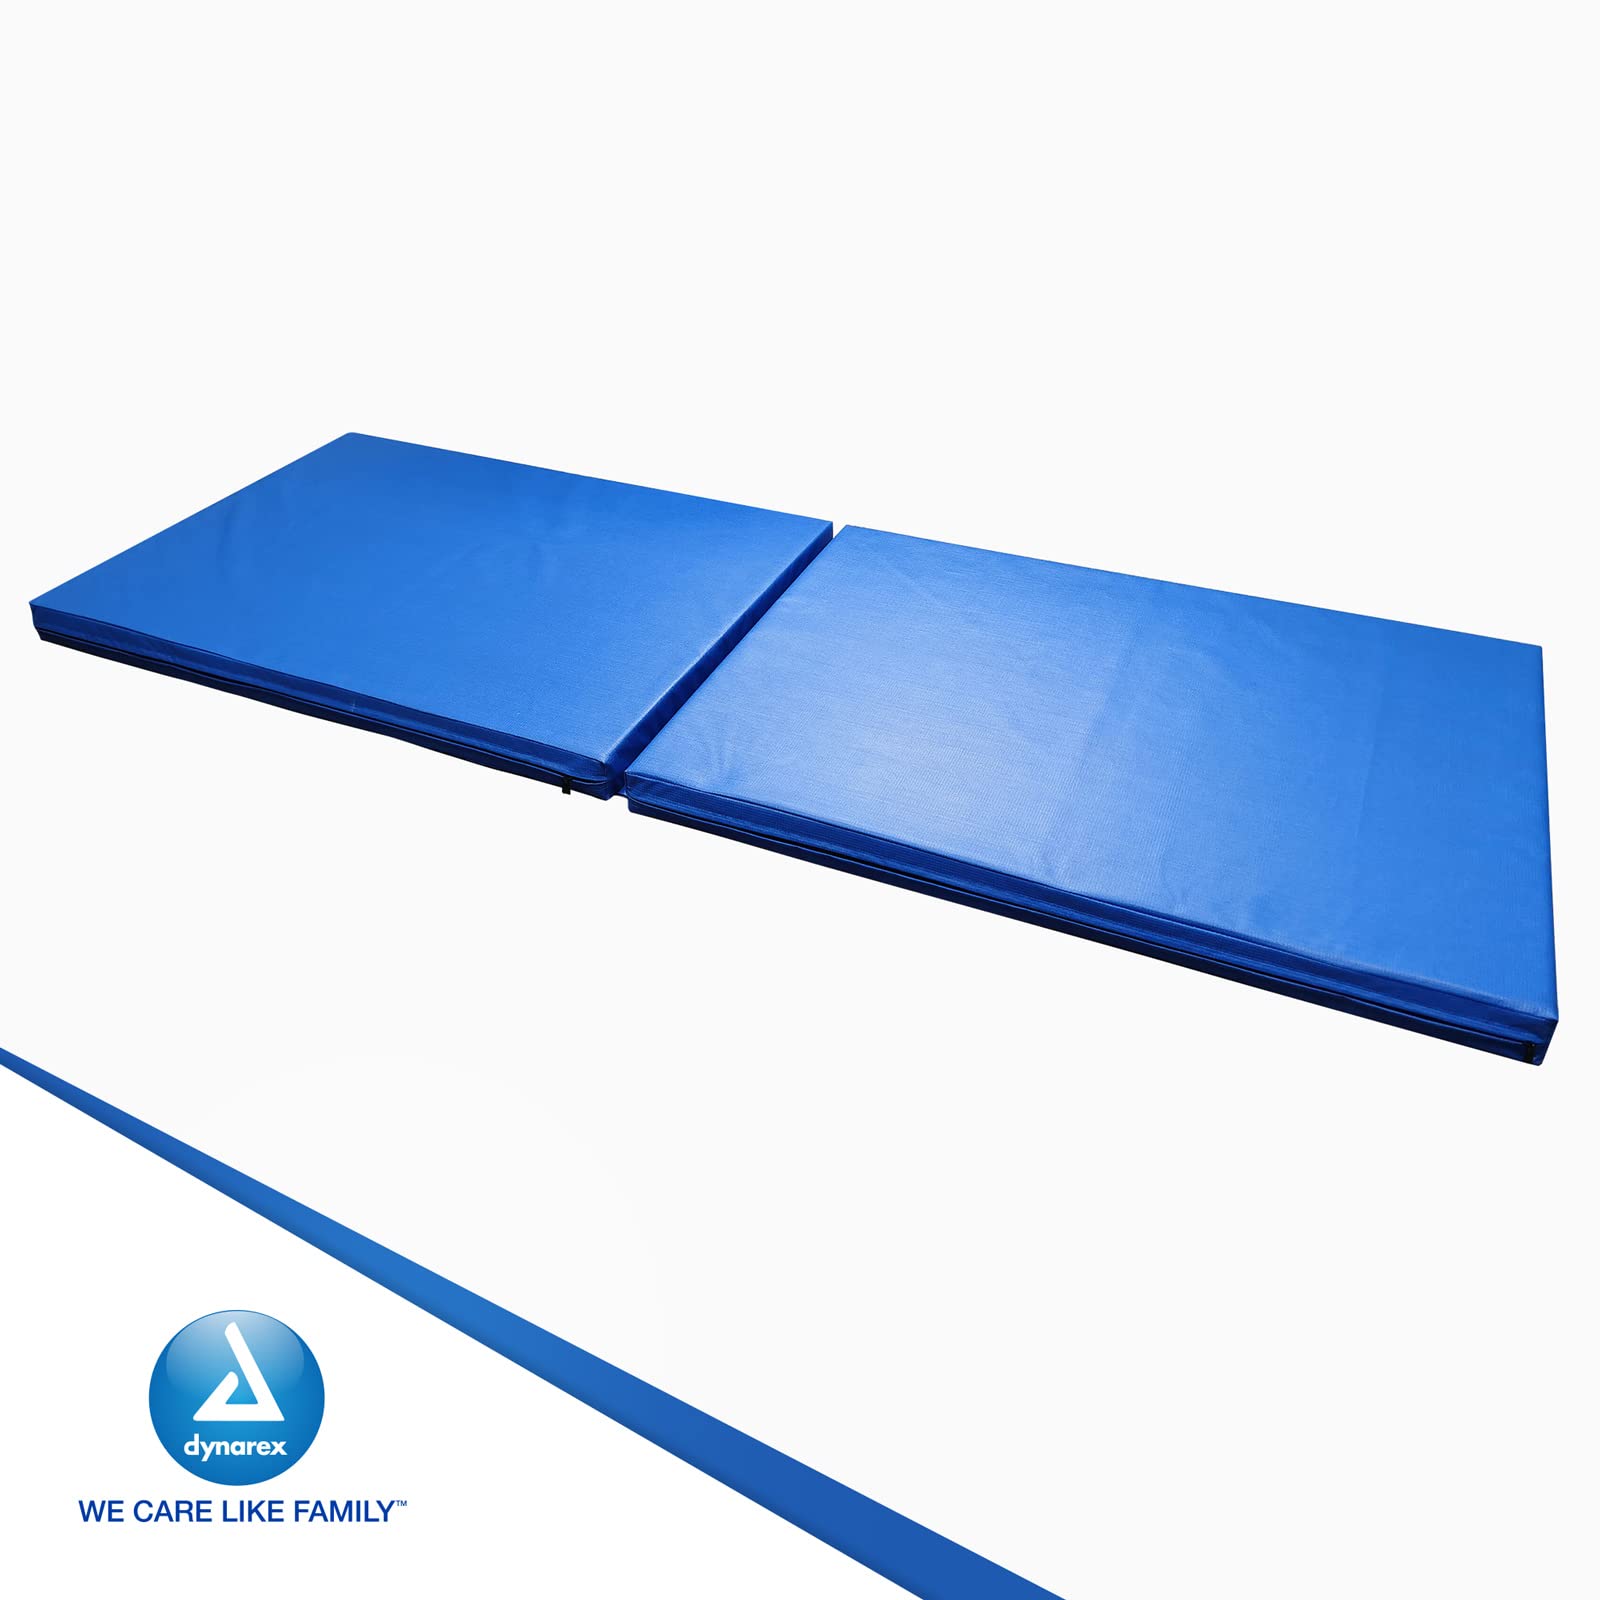 Dynarex Bedside Bi-Fold Foam Floor Mat - Waterproof Safety Floor Mat for Elderly & Hospital Patients - Accident & Fall Prevention Pad - 24